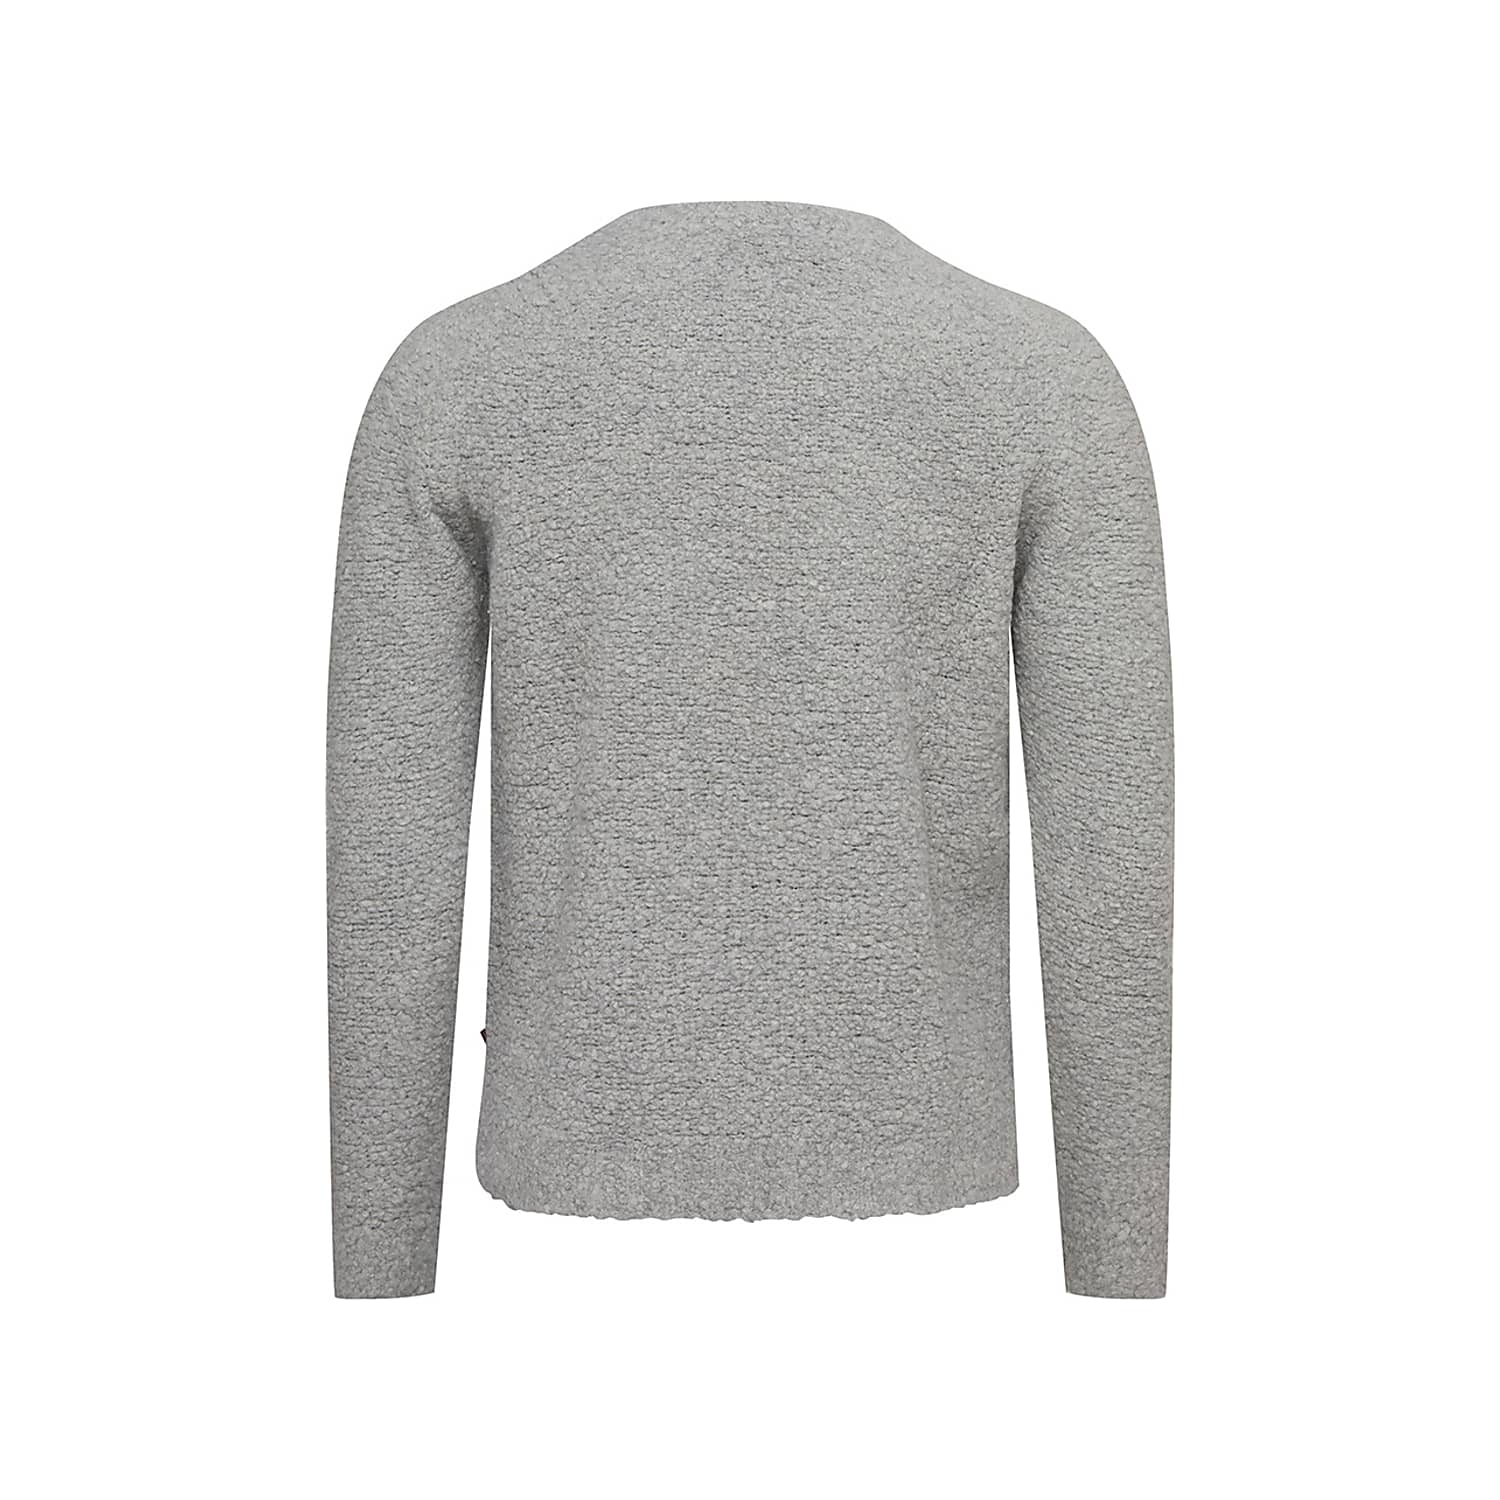 Men's sweater SAVO